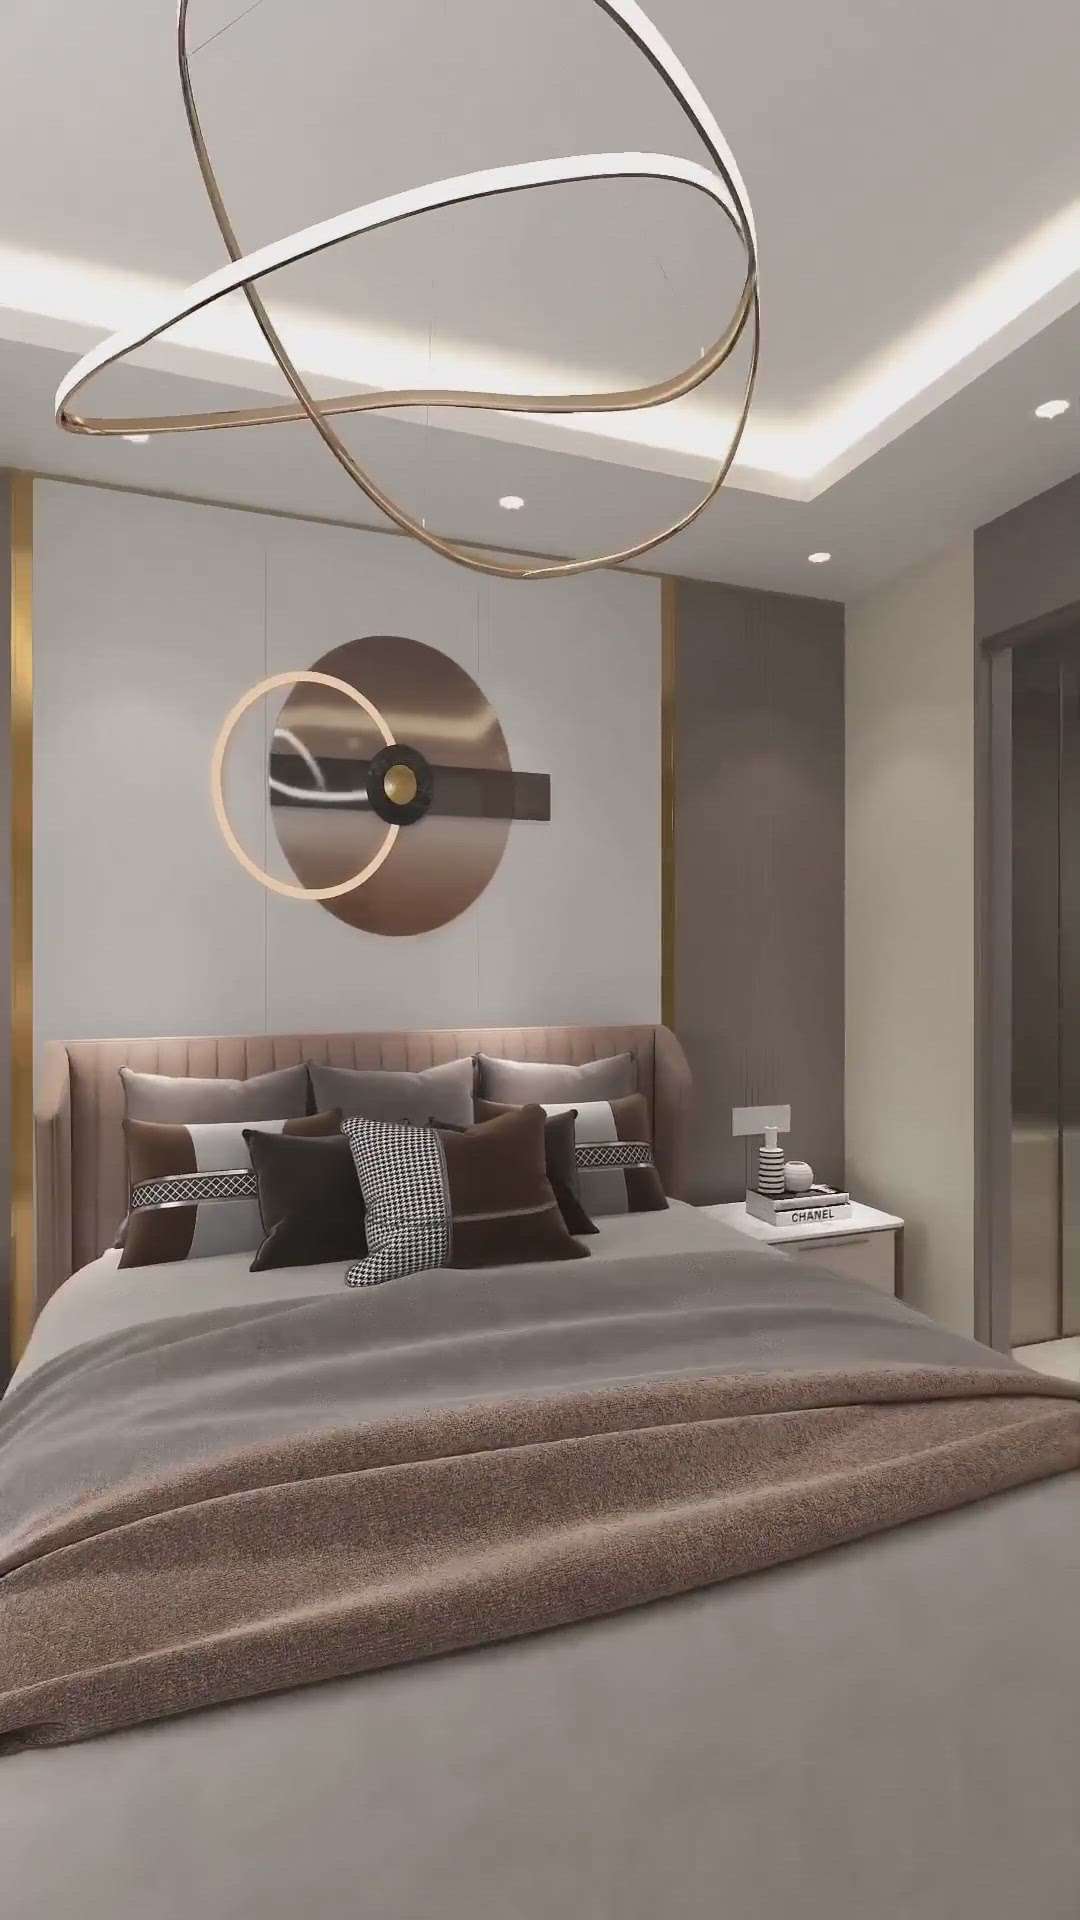 Master bedroom interior design
😍
#reflexinterior 
#reelsinstagram 
#masterbedroomdesinger 
#BedroomDecor